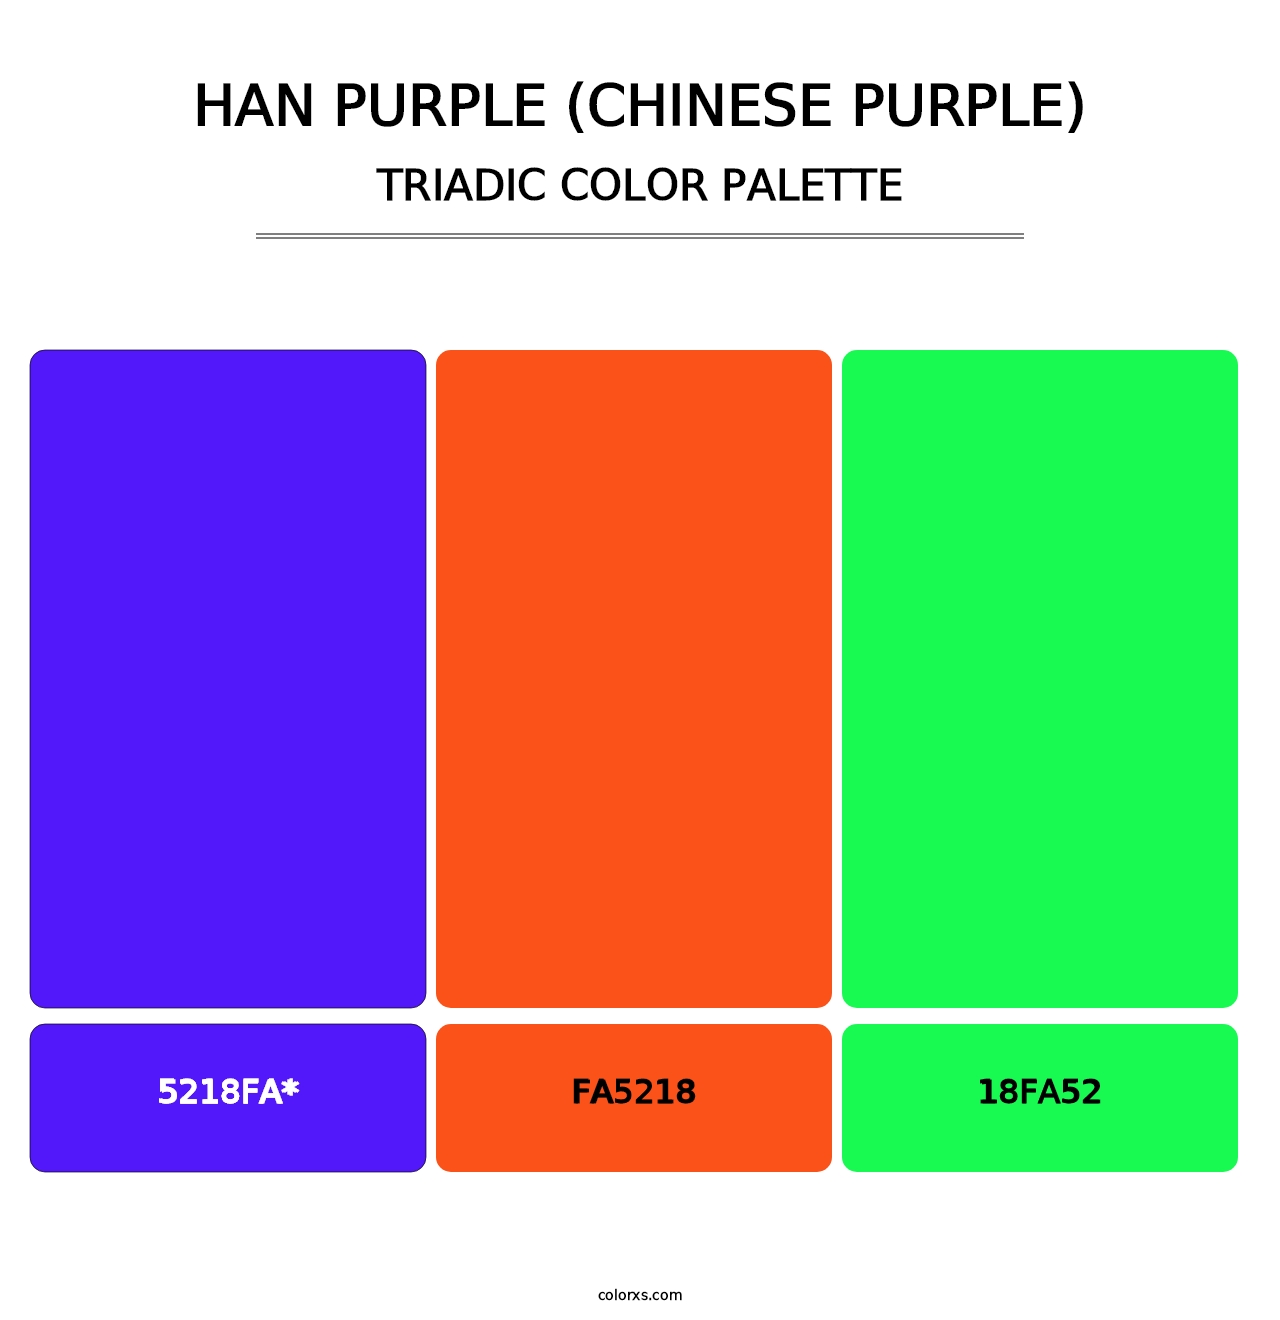 Han Purple (Chinese Purple) - Triadic Color Palette